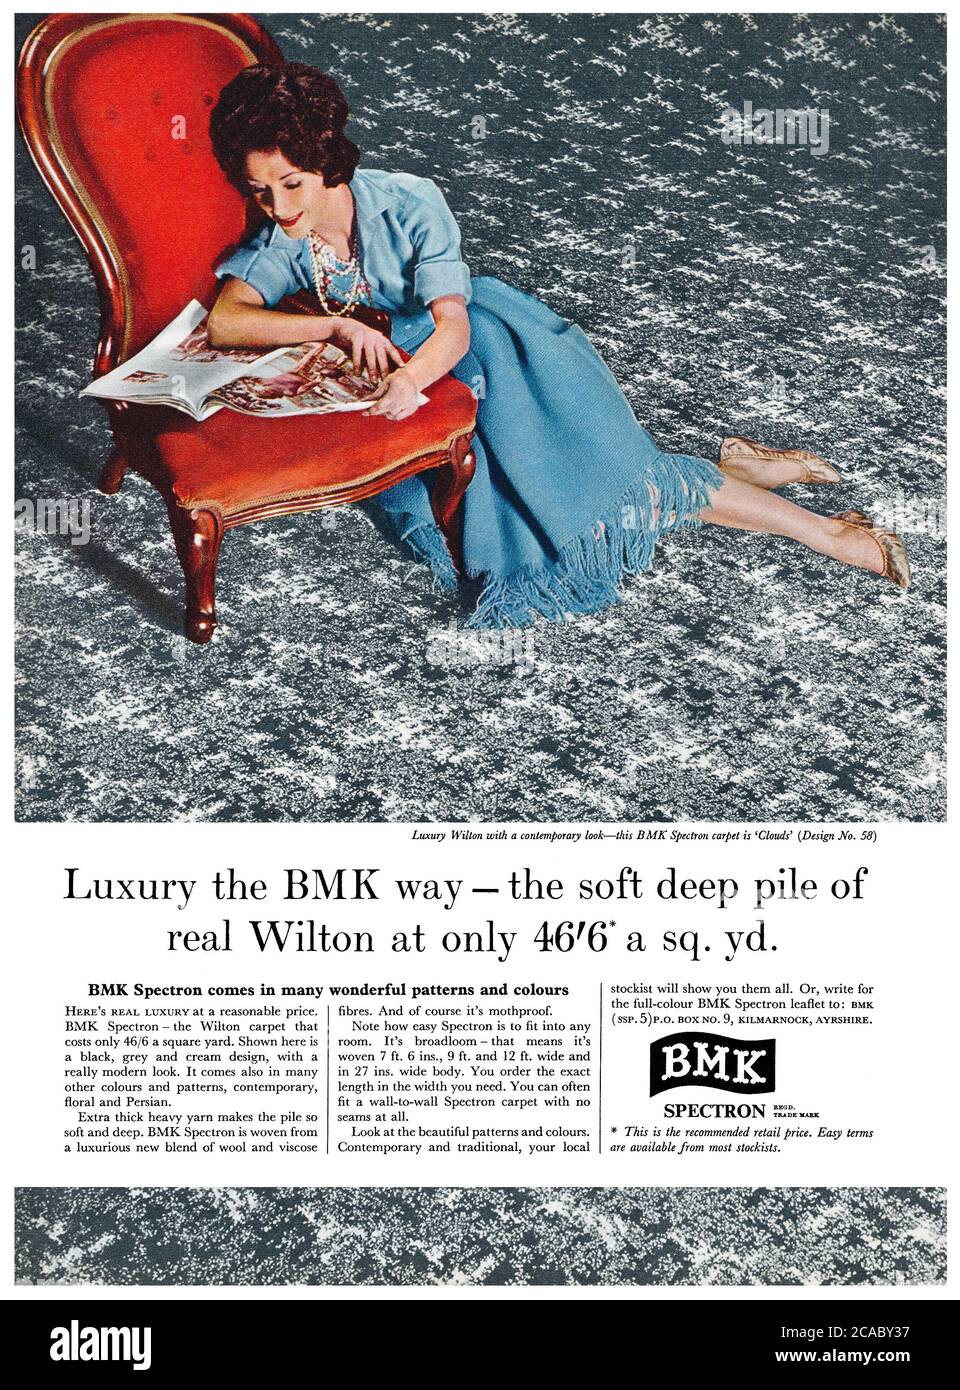 1961 British advertisement for BMK Spectron Wilton carpet. Stock Photo